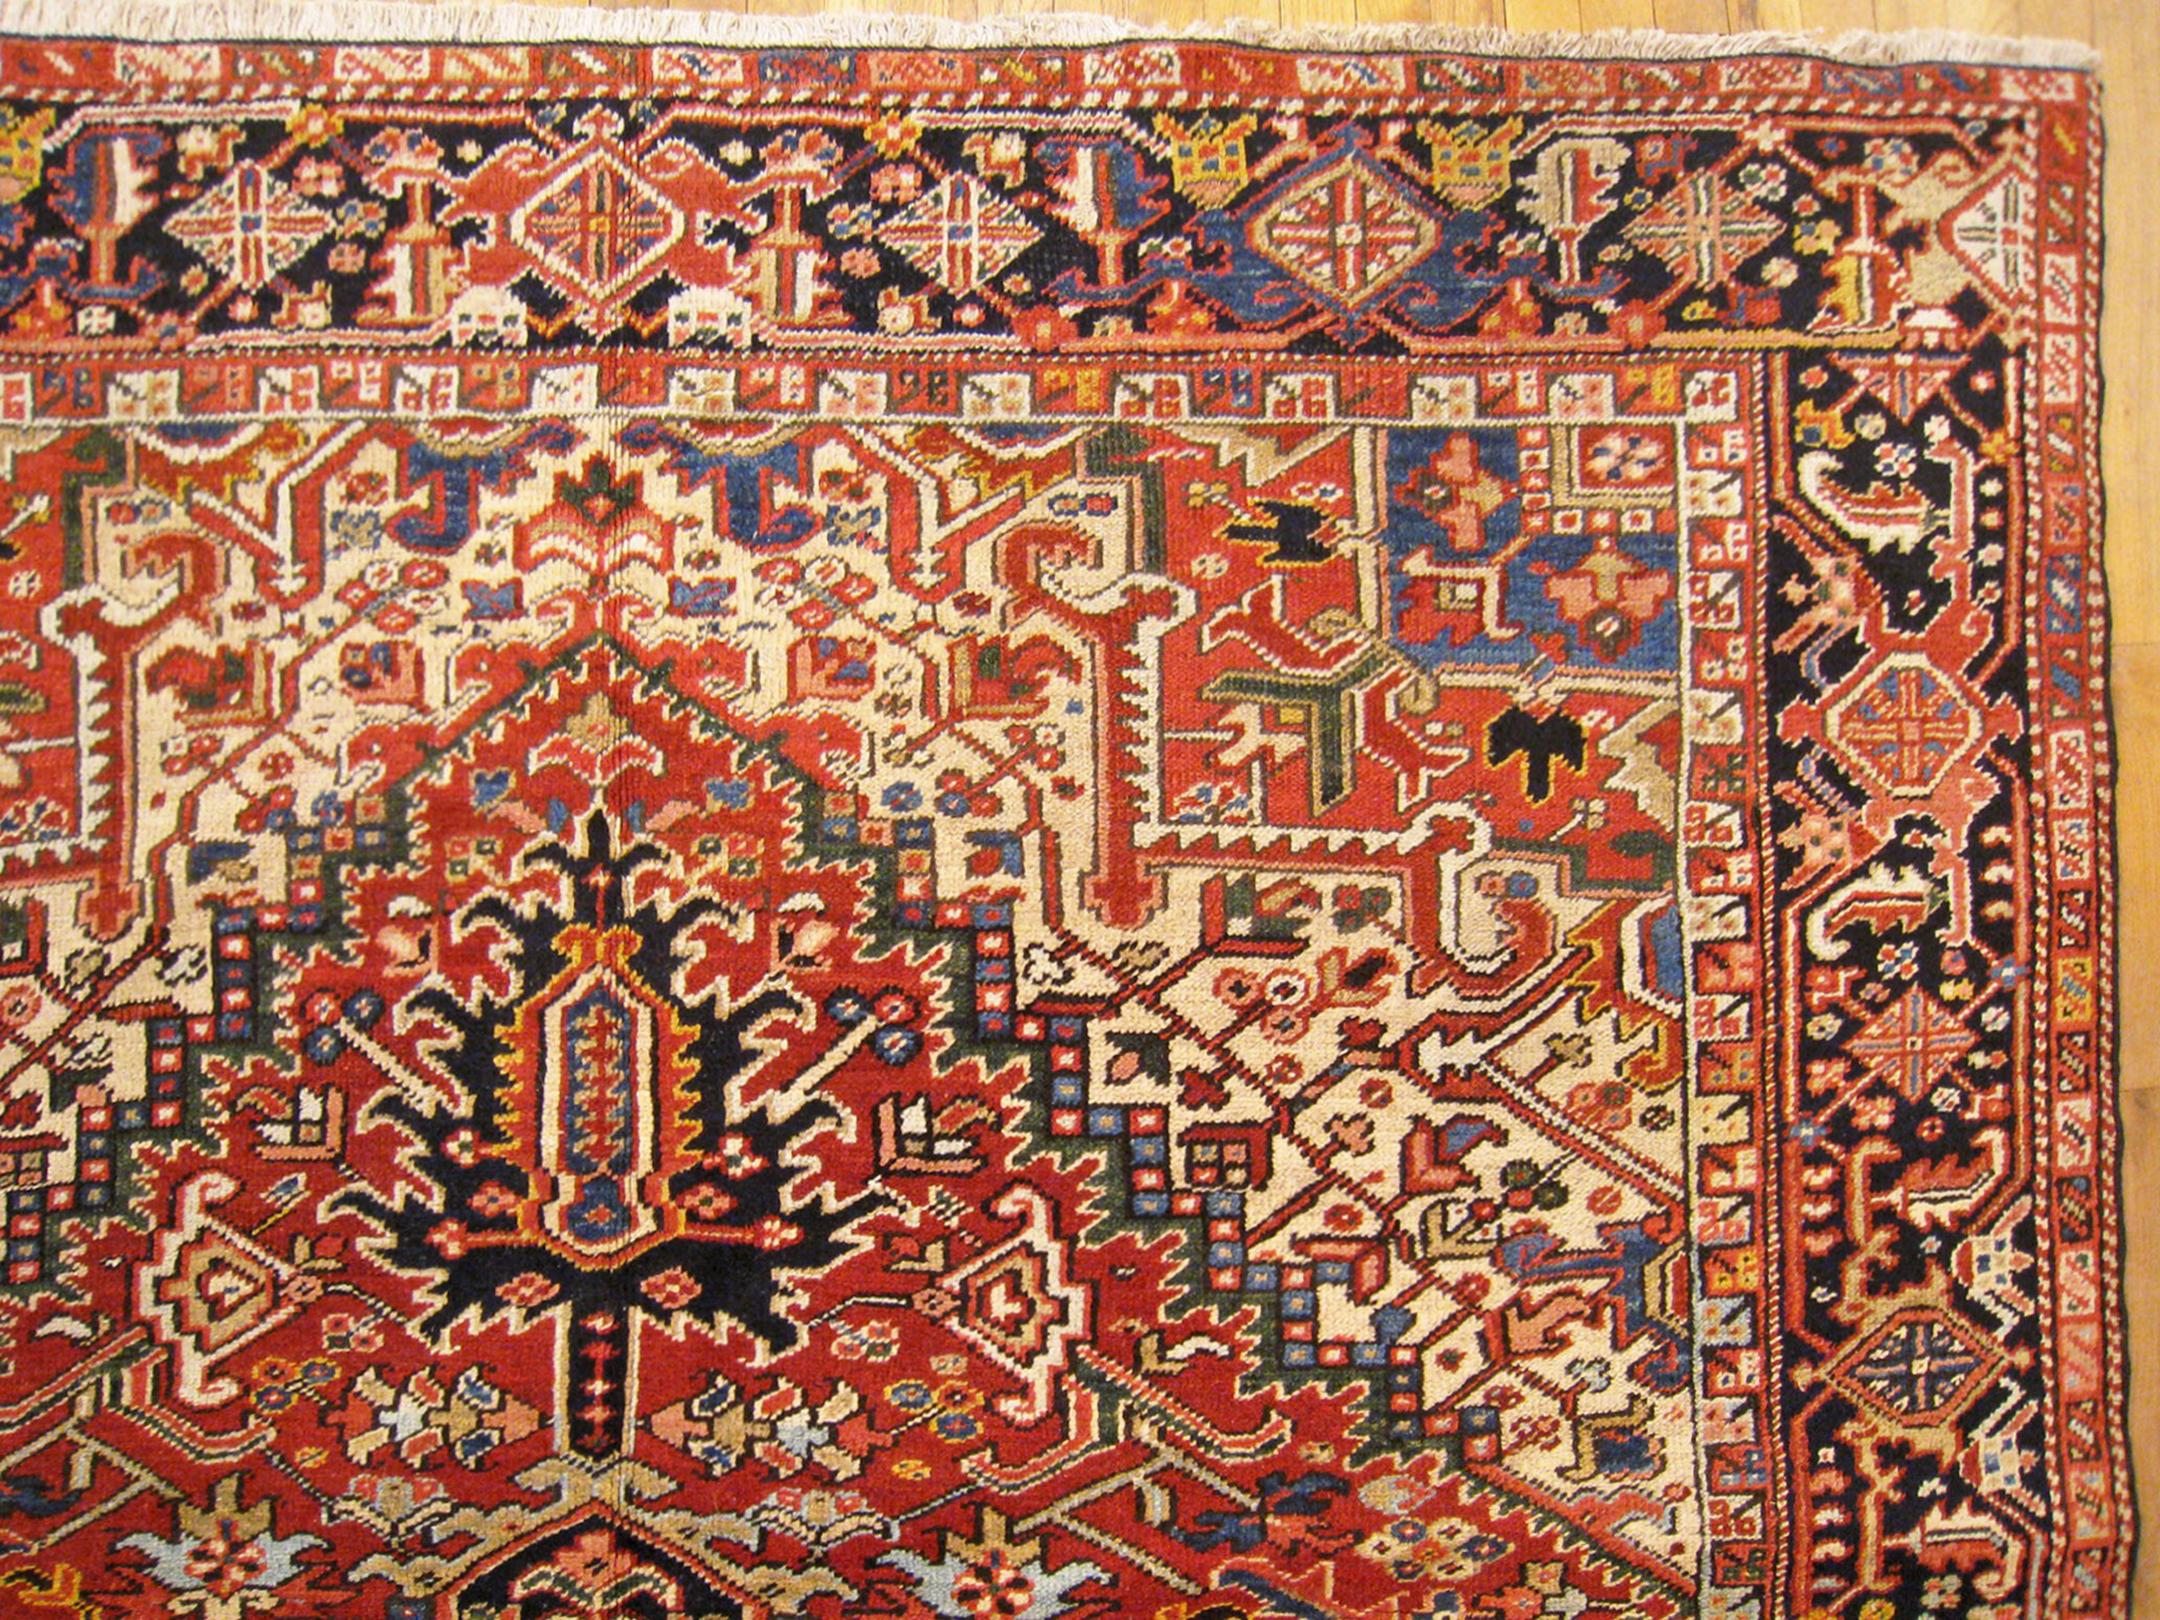  Antique Persian Decorative Oriental Heriz Rug in Room Size For Sale 1